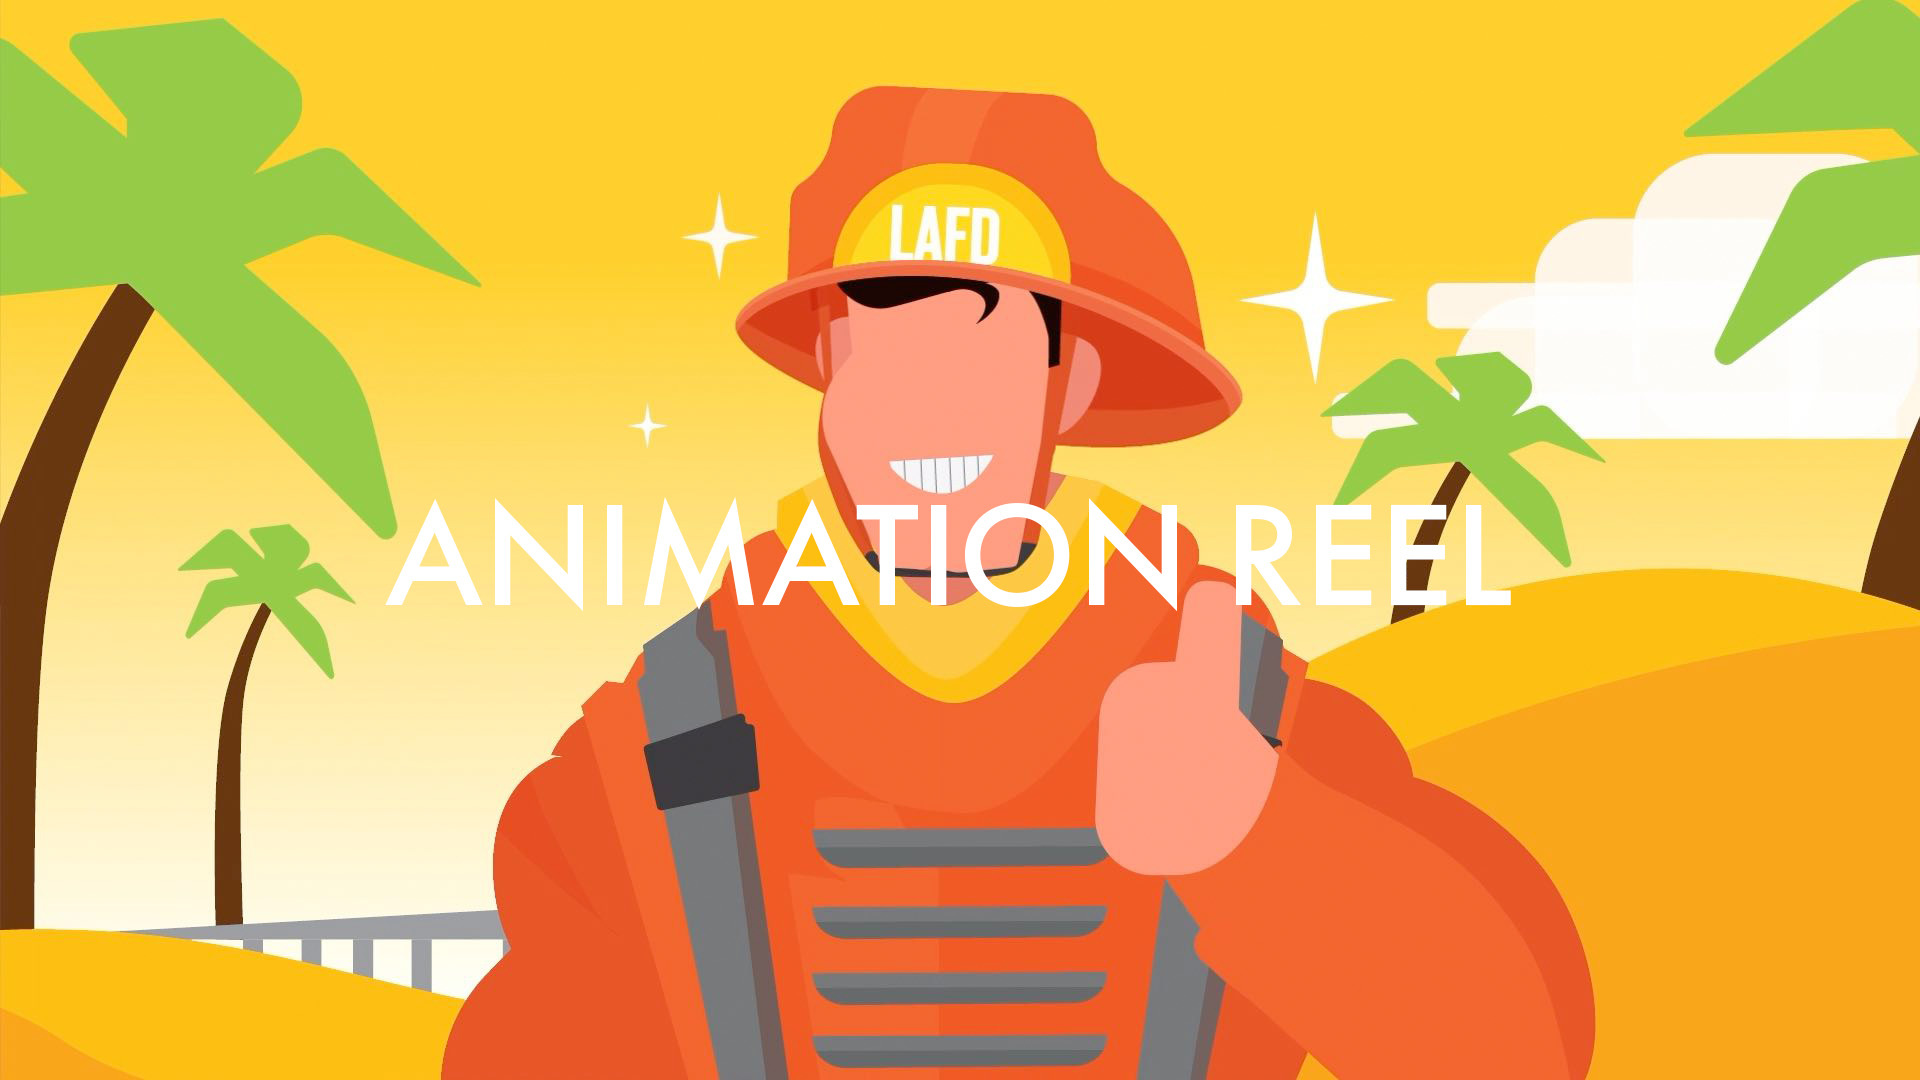 Animation Reel